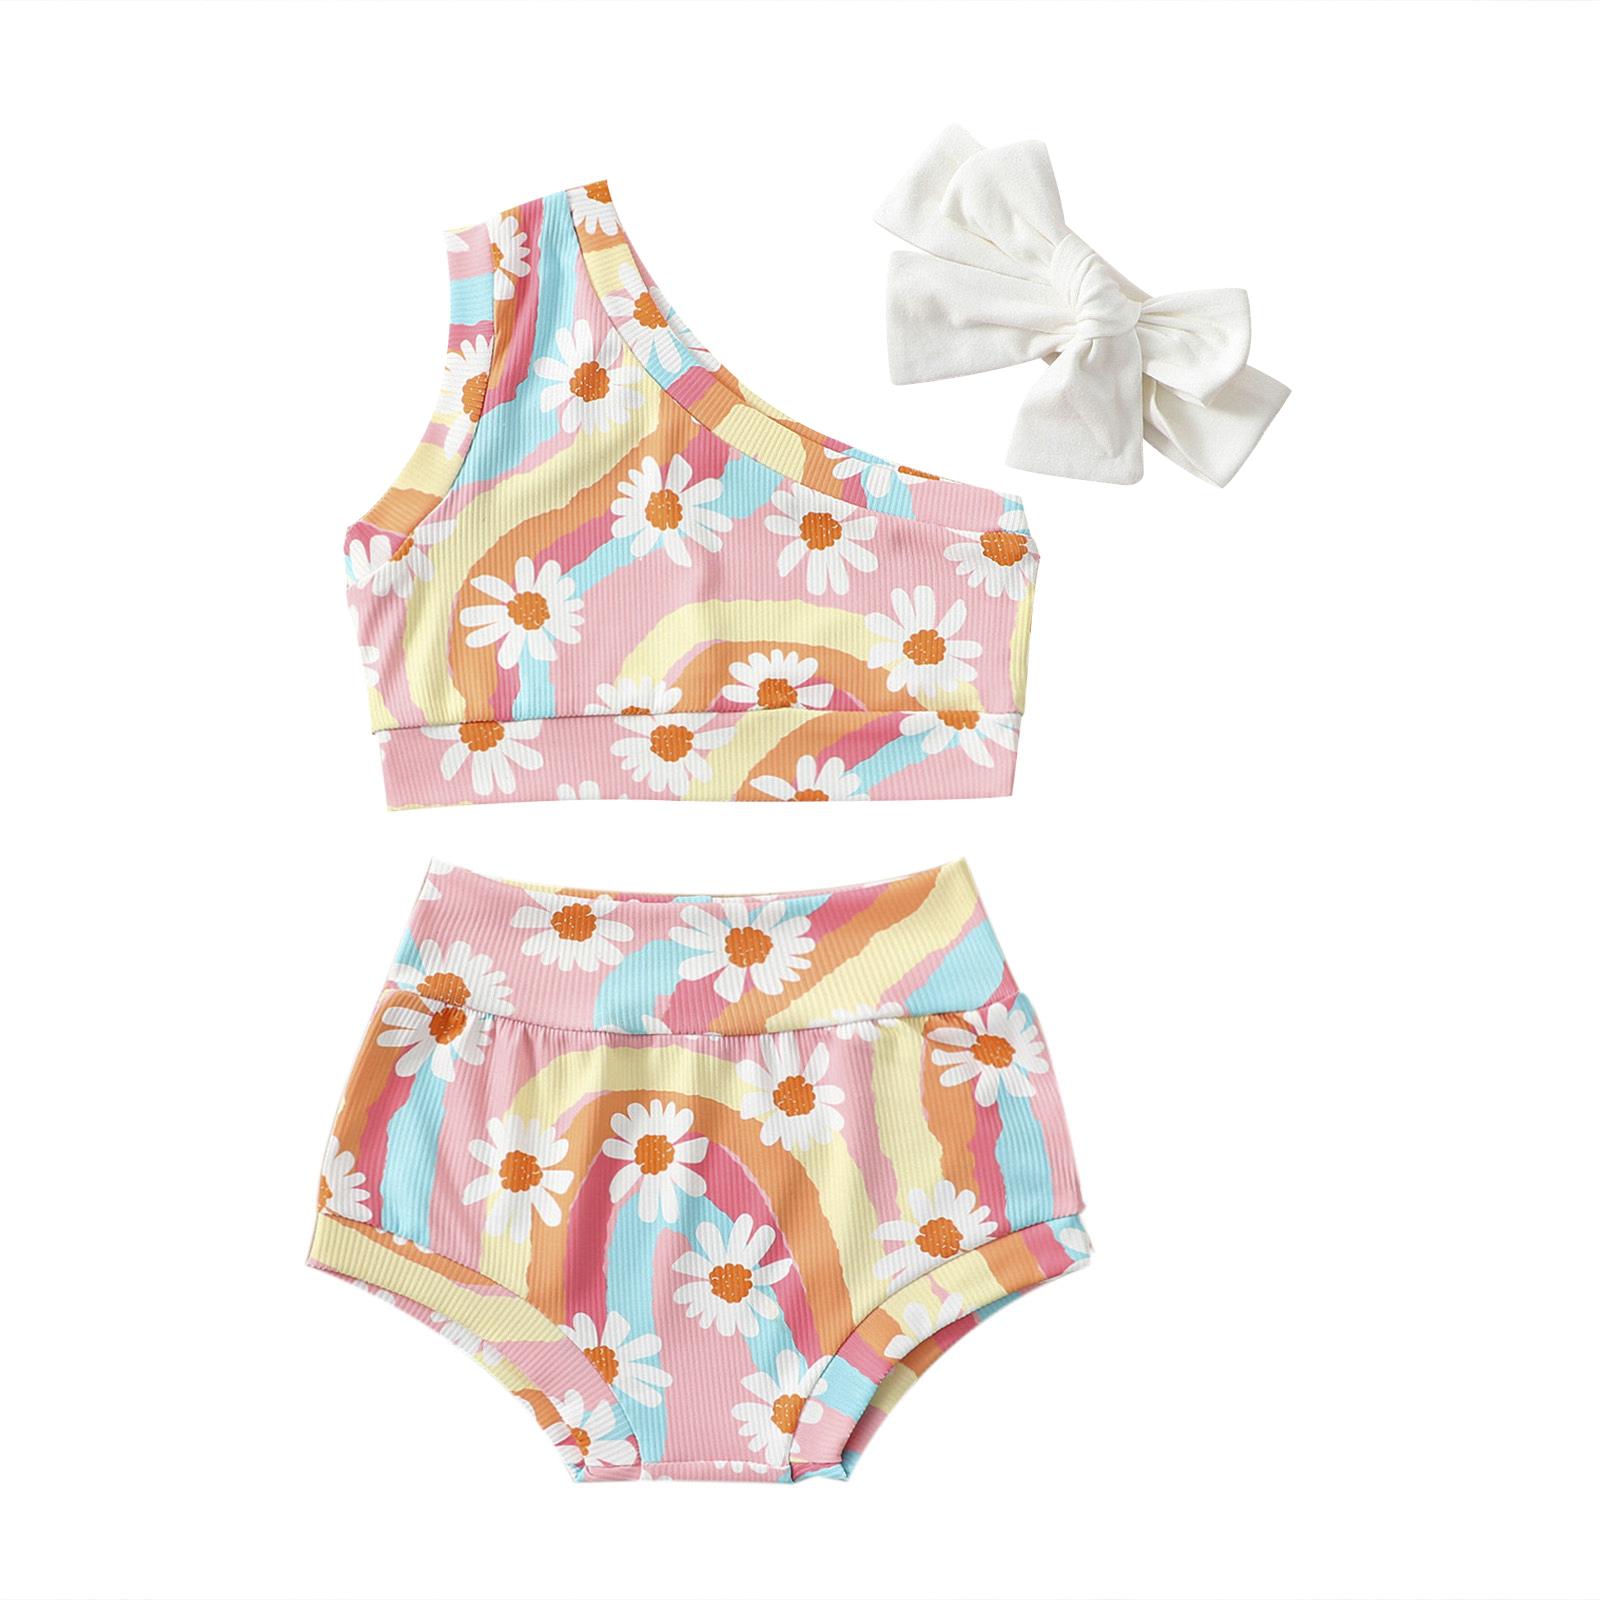 Little Fashionistas Summer Infant Baby Girls Swimsuits 6M 12M 18M 24M Rainbow Floral Print Bikini Set Sleeveless Bathing Suit Clothes